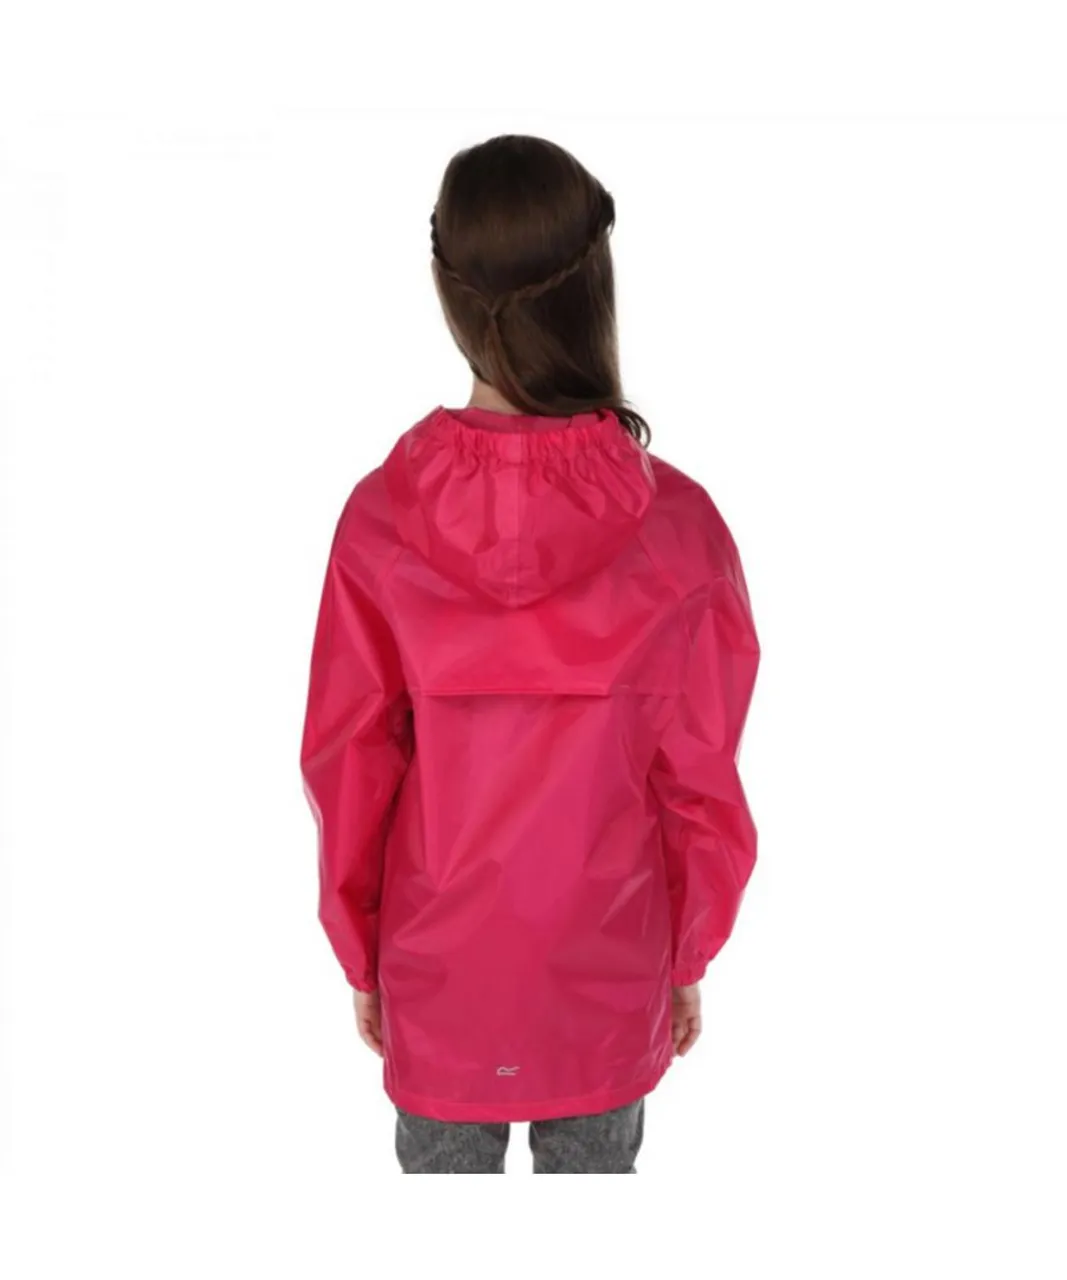 Regatta Girls Kids Stormbreak Waterproof Jacket - Pink